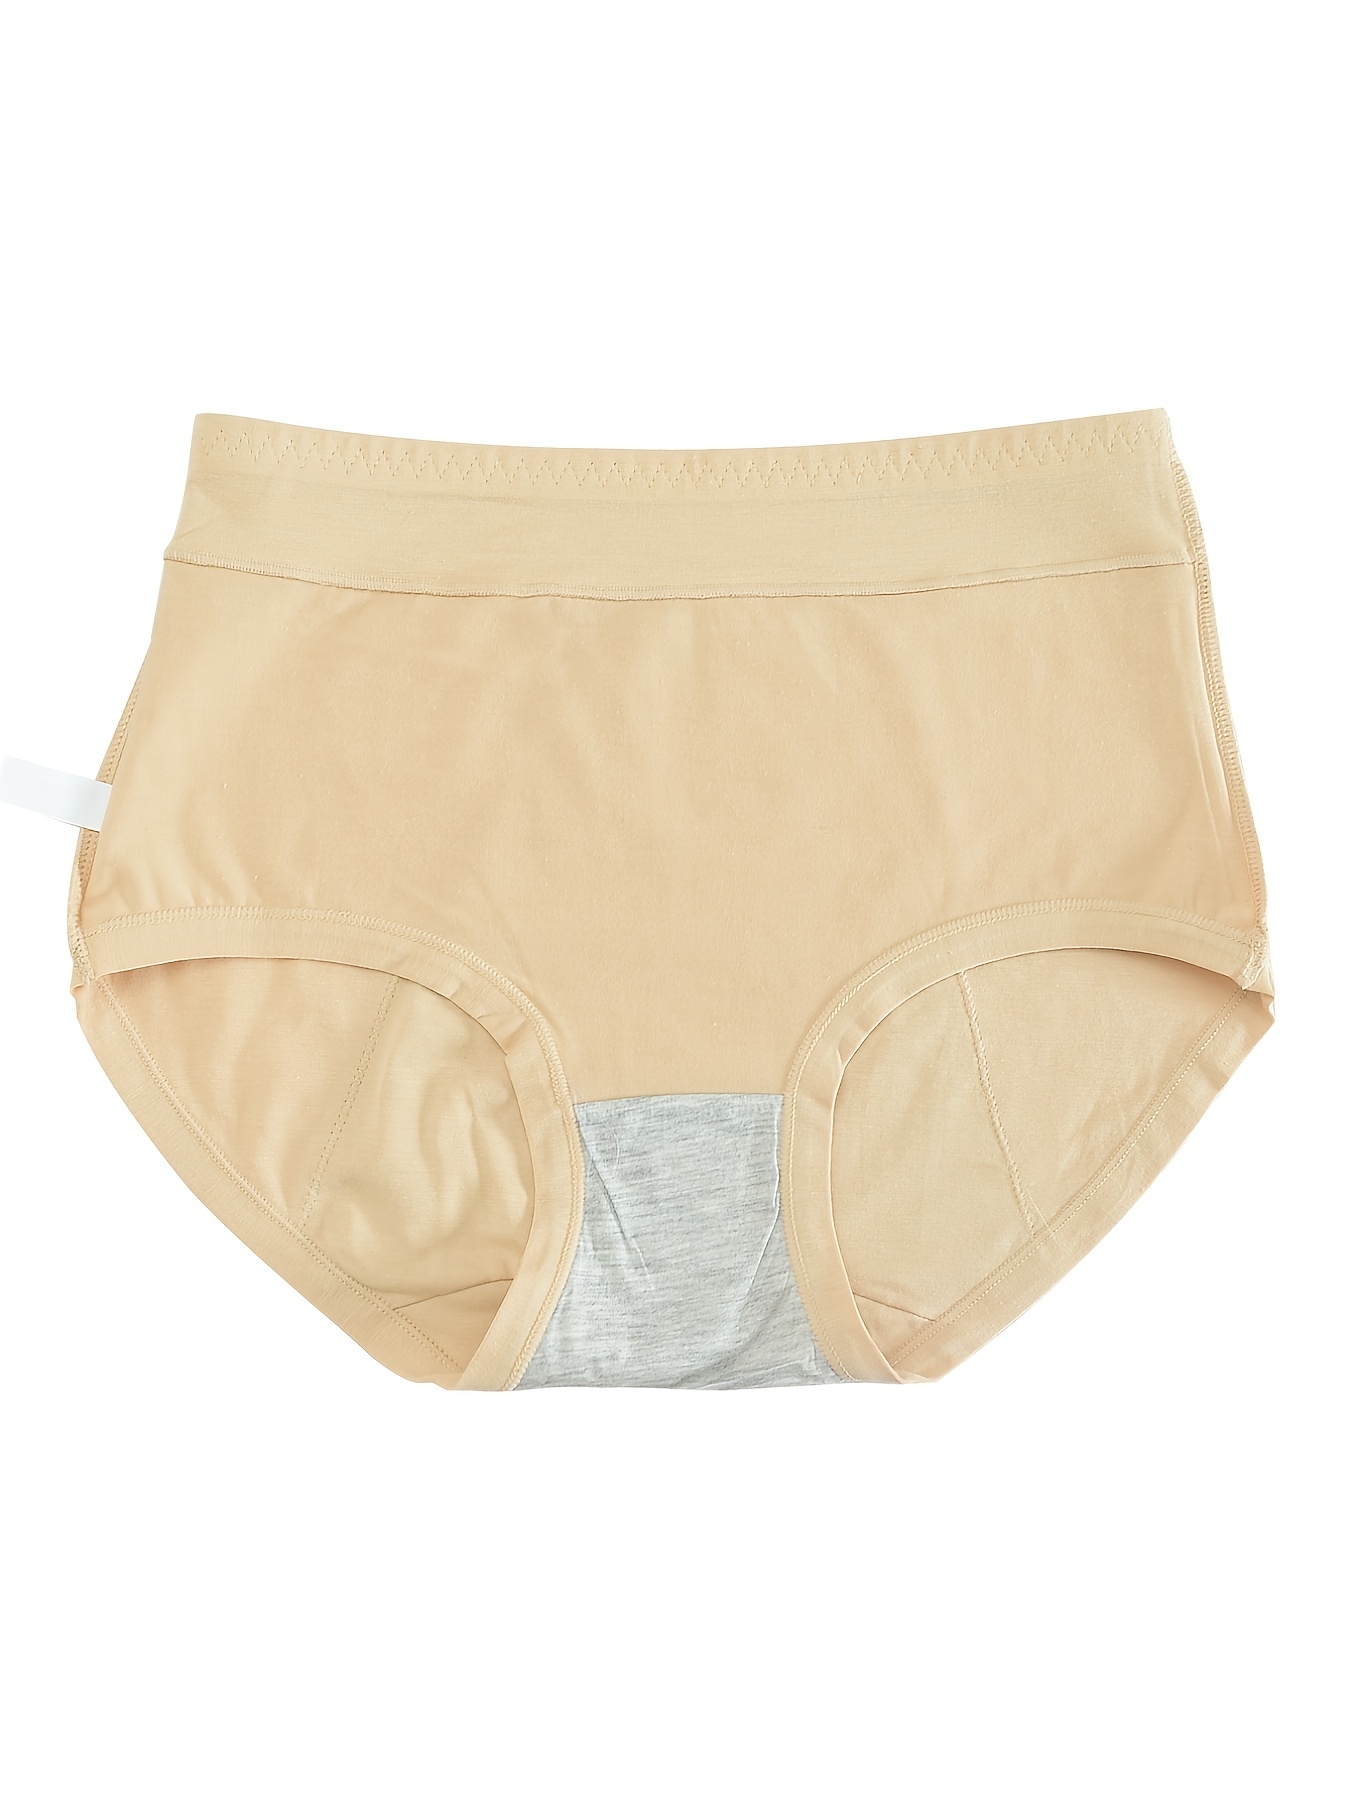 1pcs High Waist Cotton Pregnant Panties, Underwear For Women